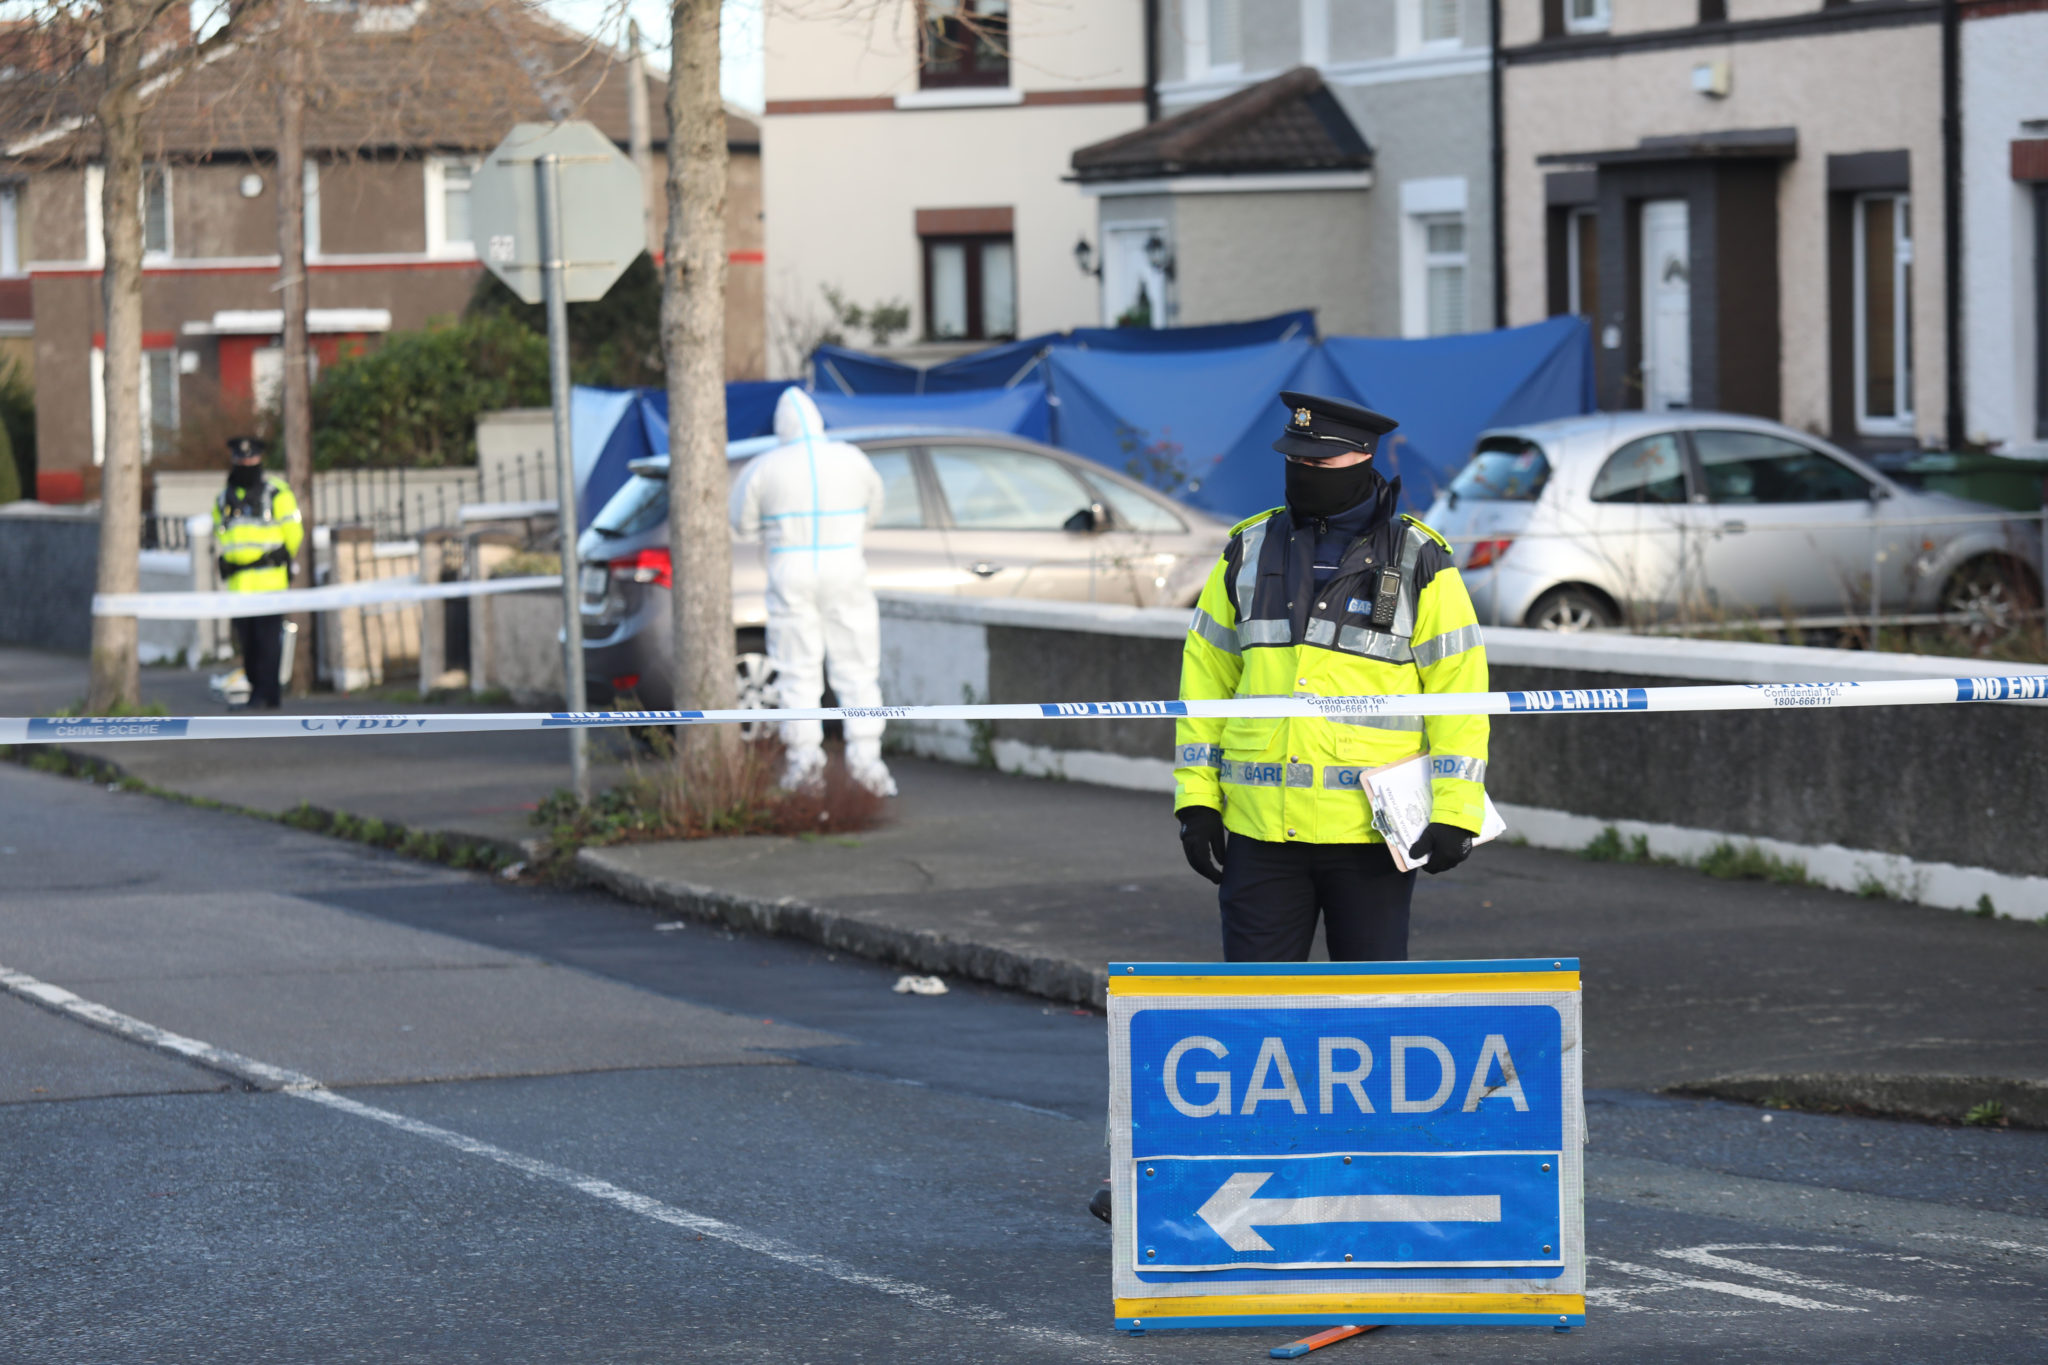 Garda forensic investigators examine the scene 49-year-old Michael Tormey was shot dead in Ballyfermot, Dublin